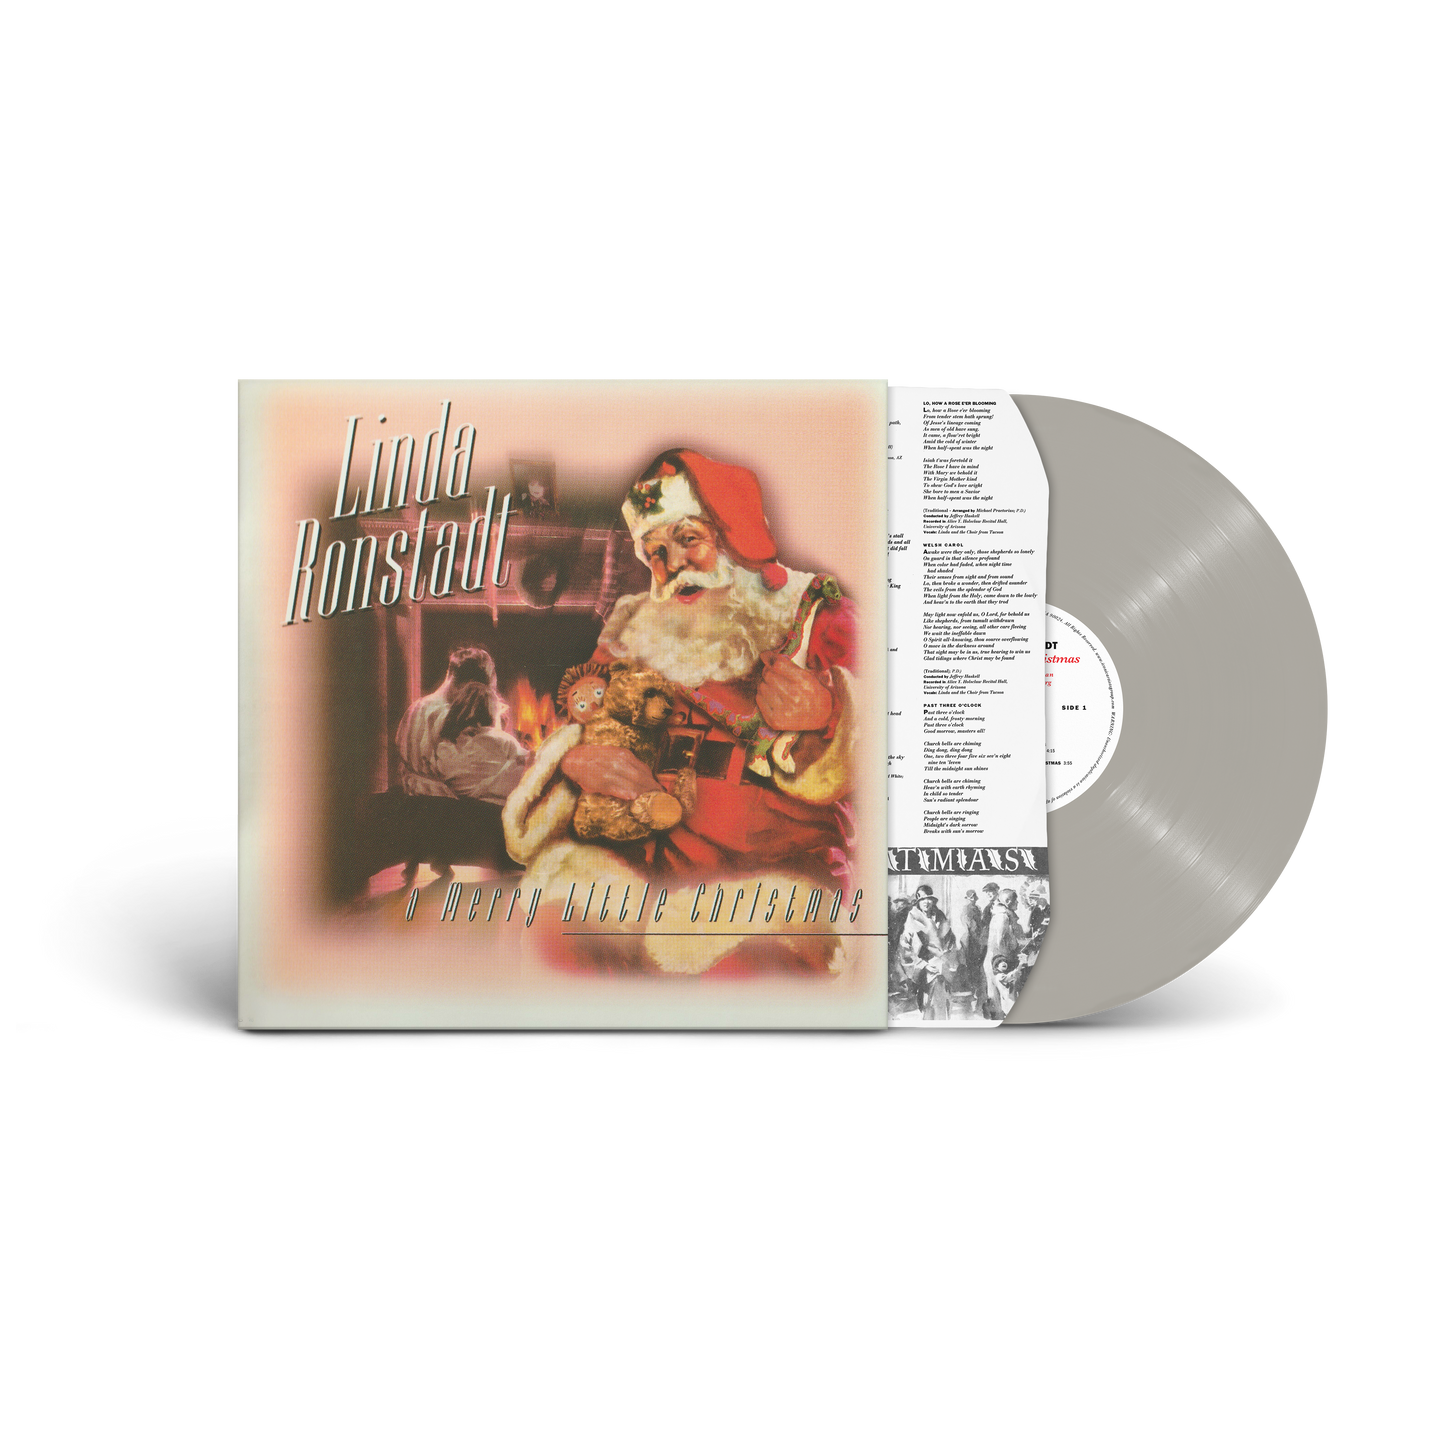 Linda Ronstadt - a Merry Little Christmas Opaque Metallic Silver Vinyl LP (Pre-order)